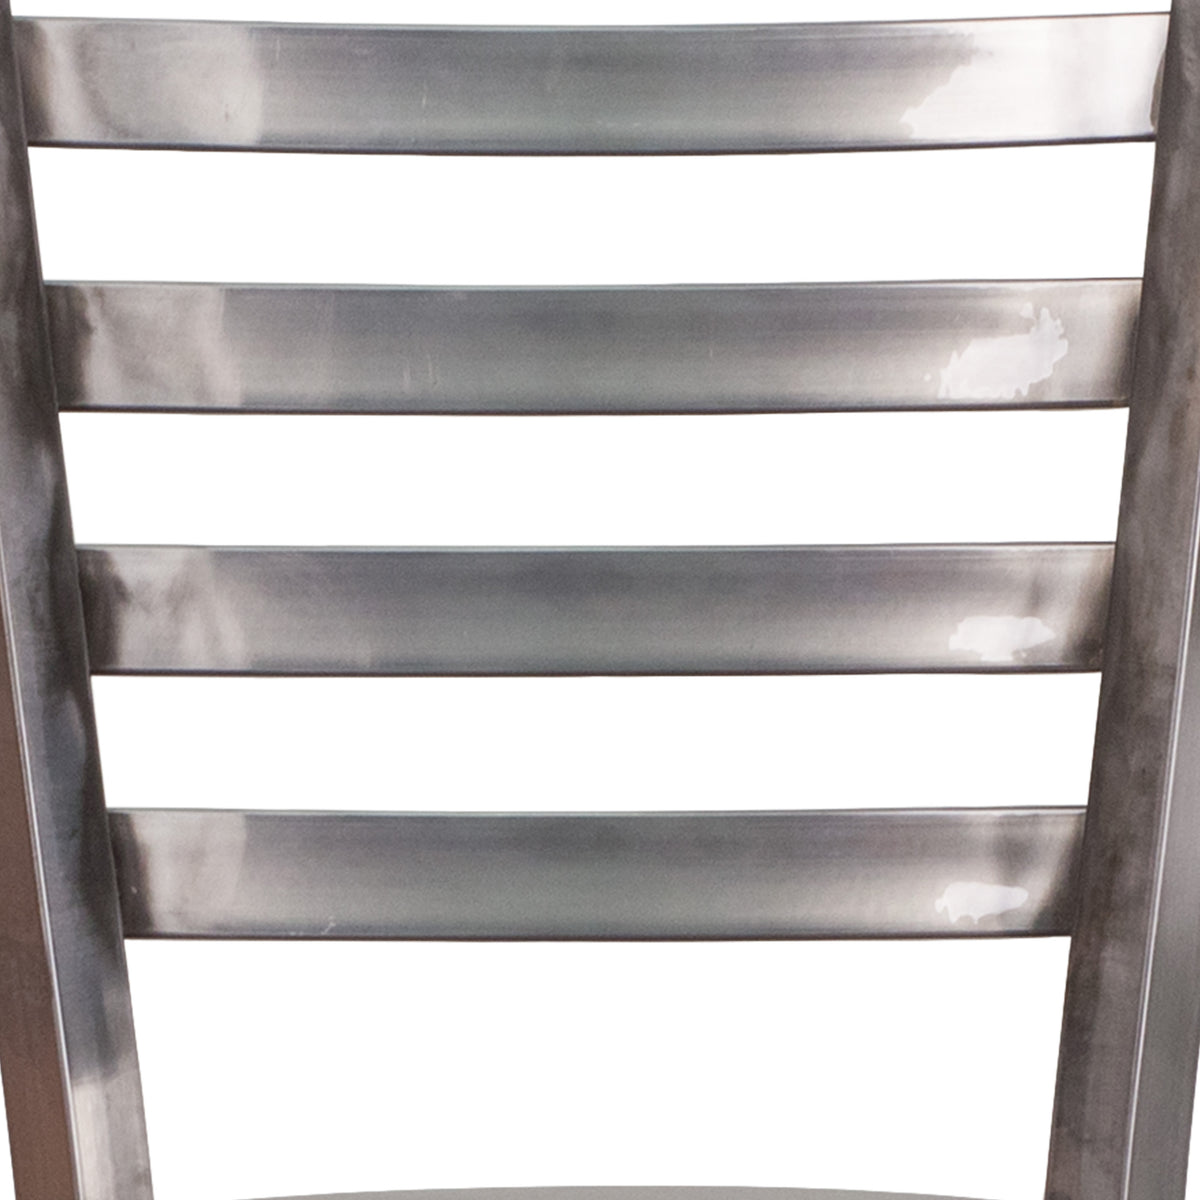 Walnut Wood Seat/Clear Coated Metal Frame |#| Clear Coated Ladder Back Metal Restaurant Barstool - Walnut Wood Seat